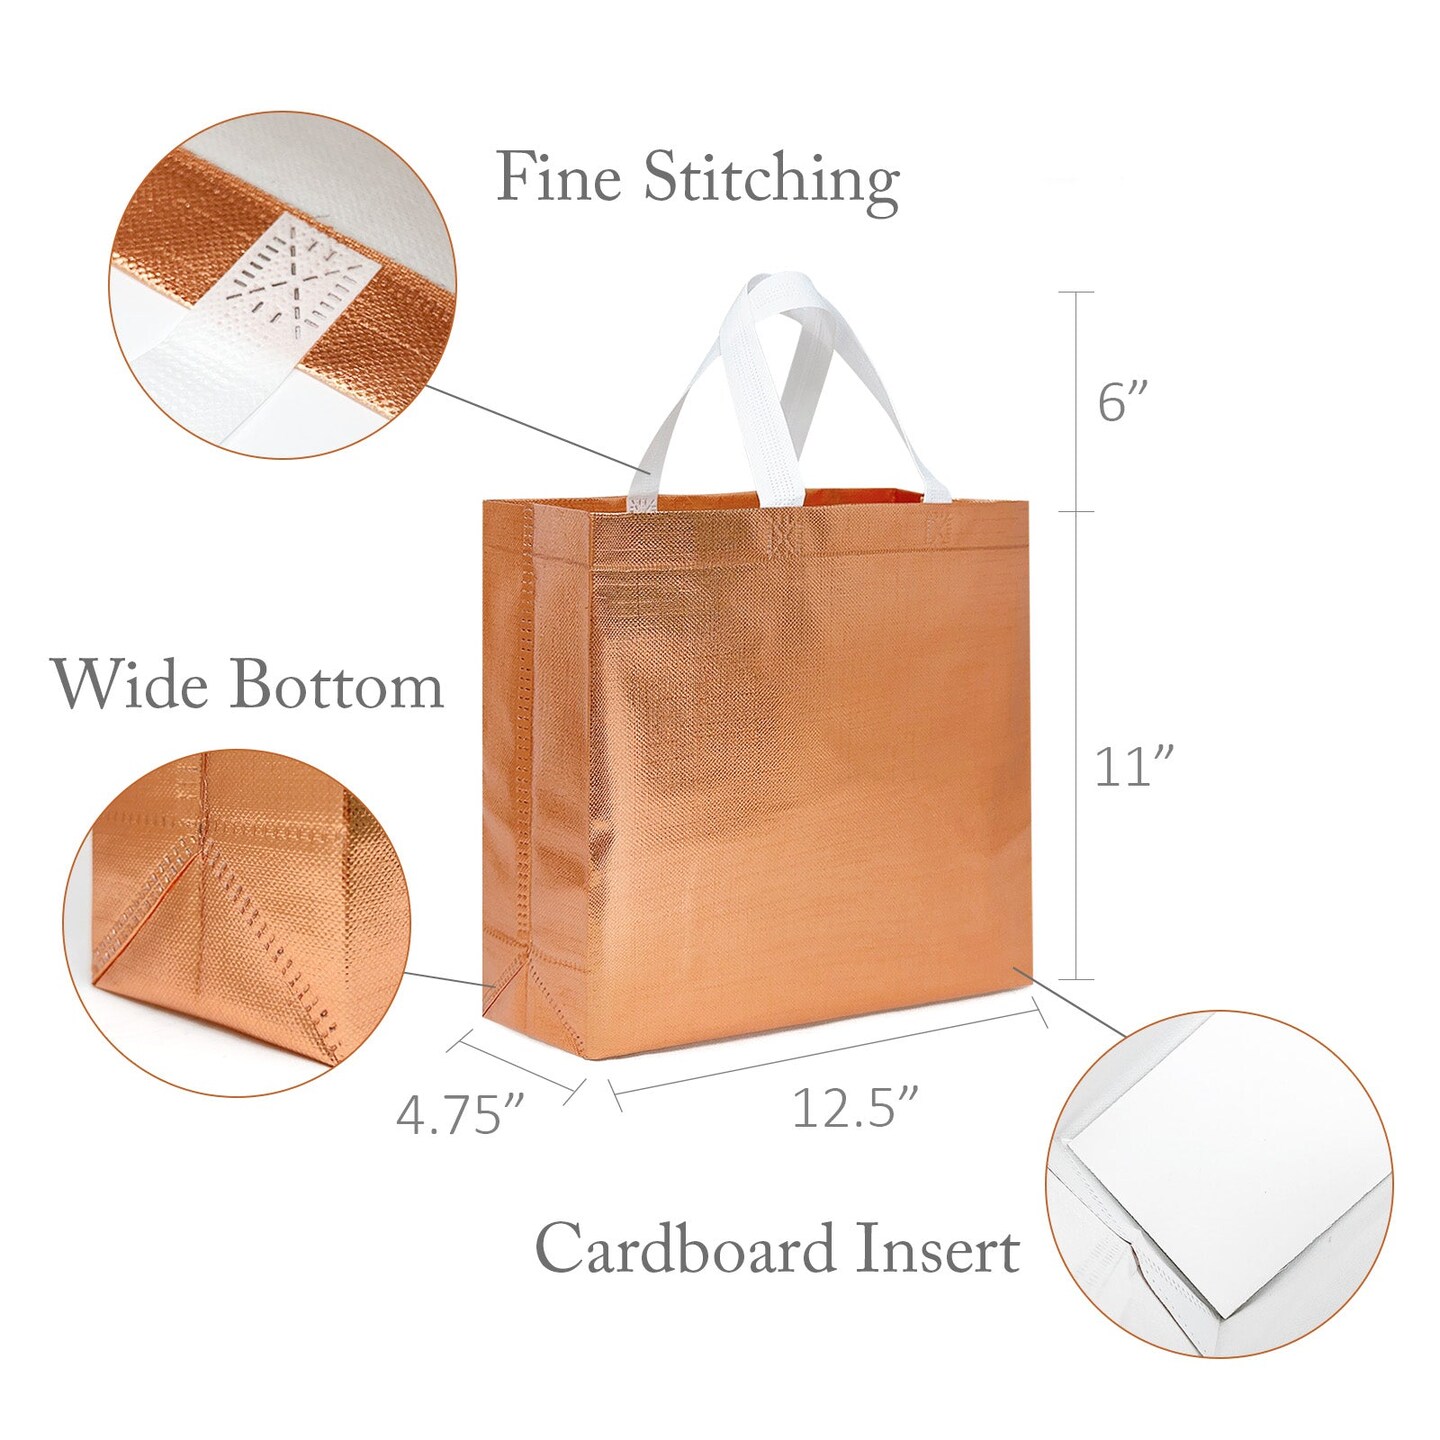 Pink & Orange Tissue Paper Pack by Ashland®